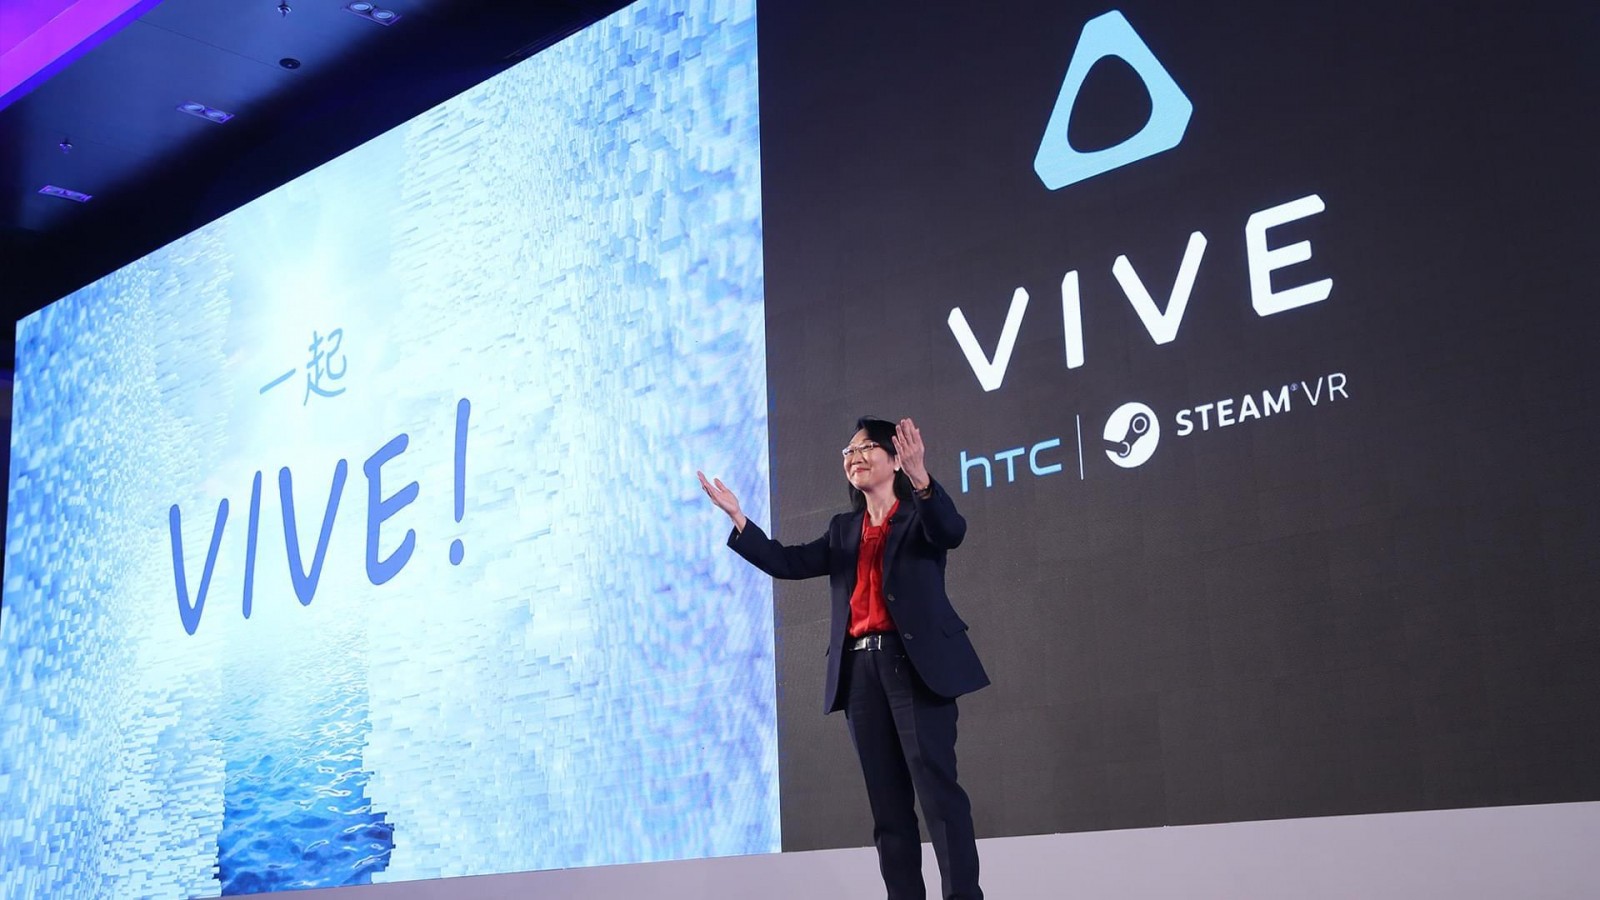 Vive X ищет талантливых VR разработчиков в Европе